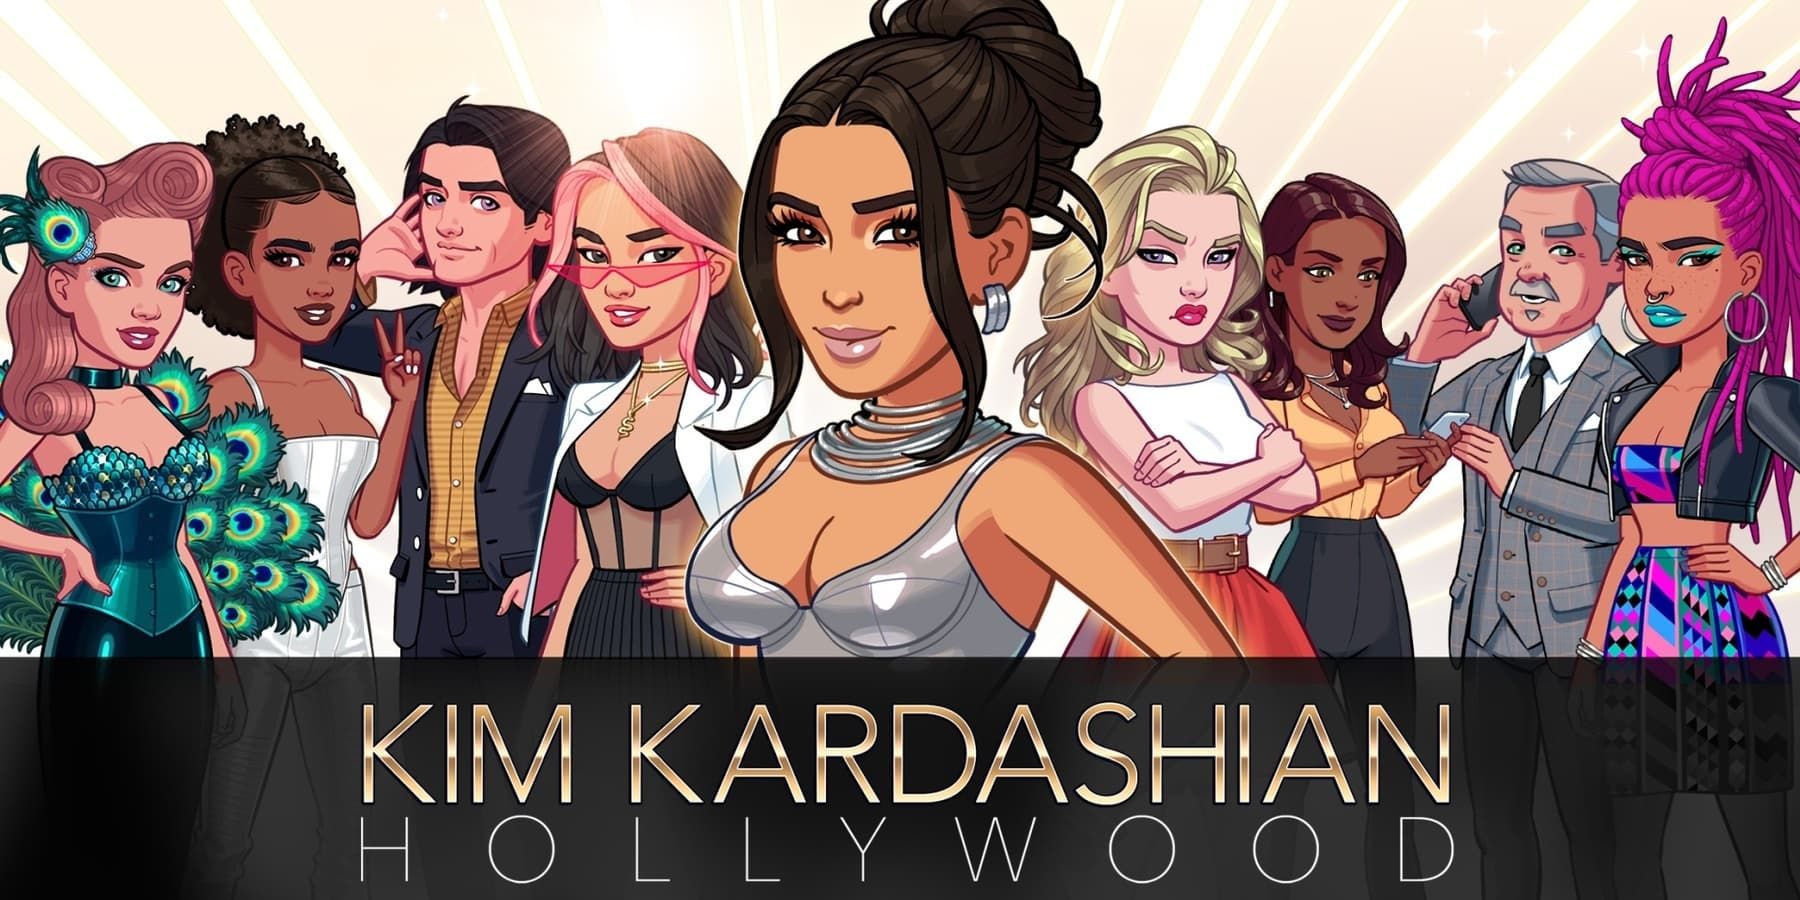 kim kardashian hollywood shuts down after 10 years